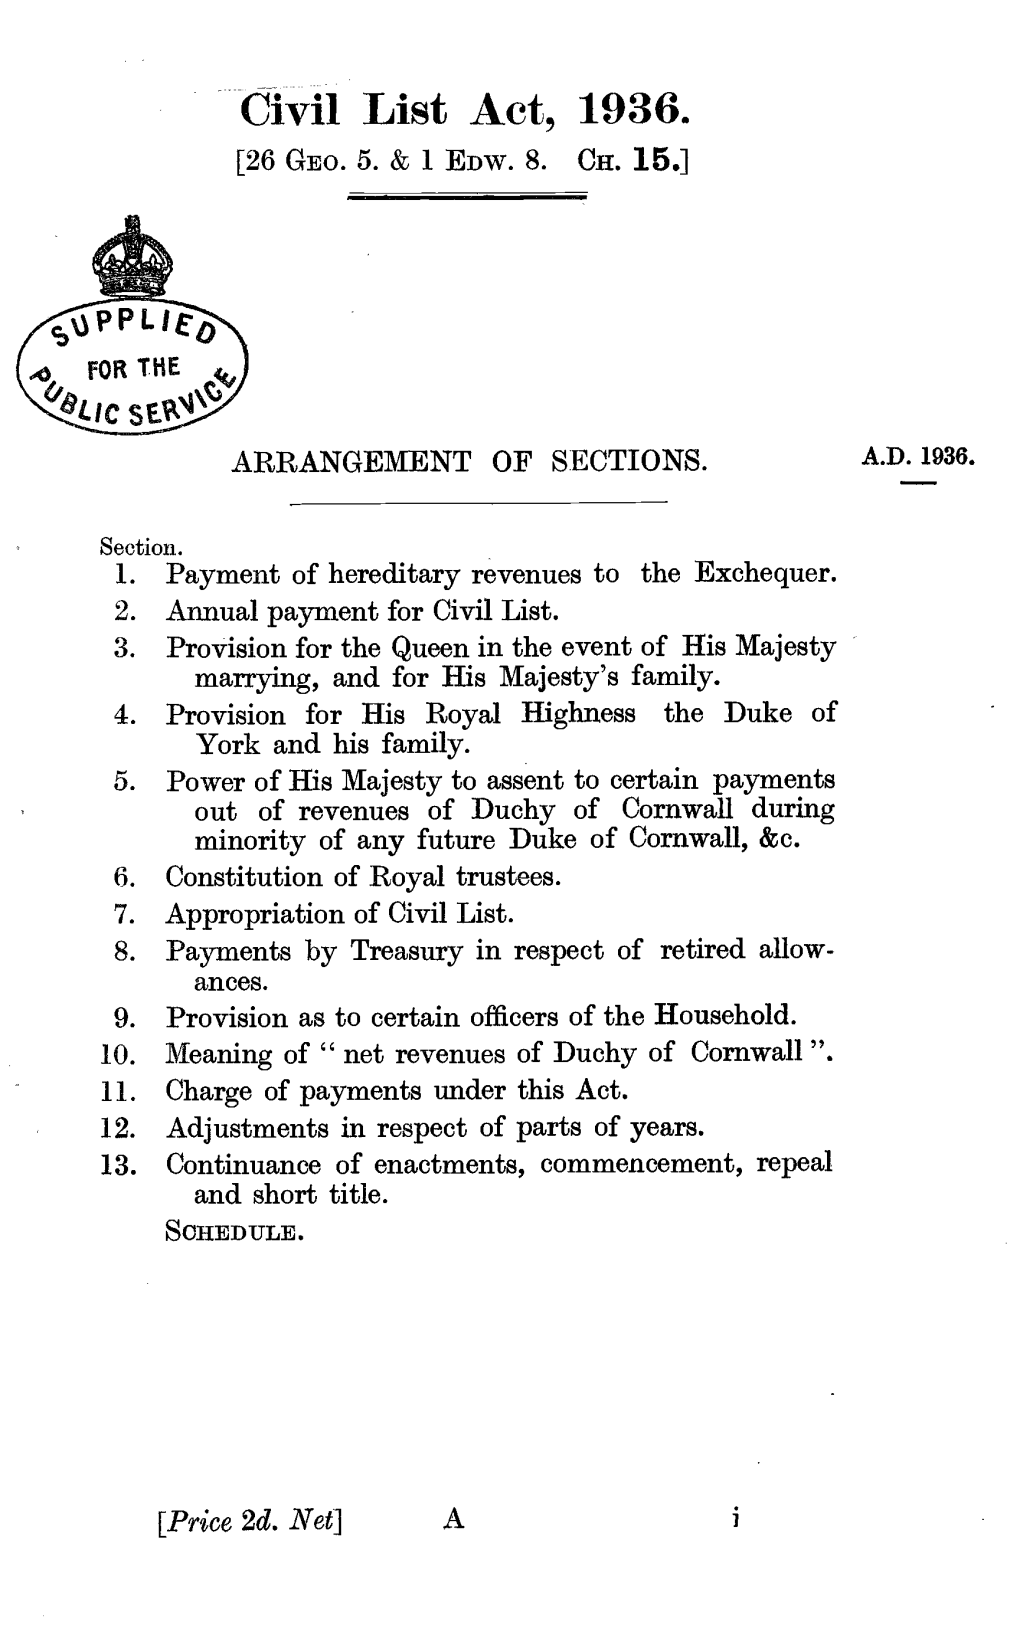 Civil List Act, 1936. [26 GEO